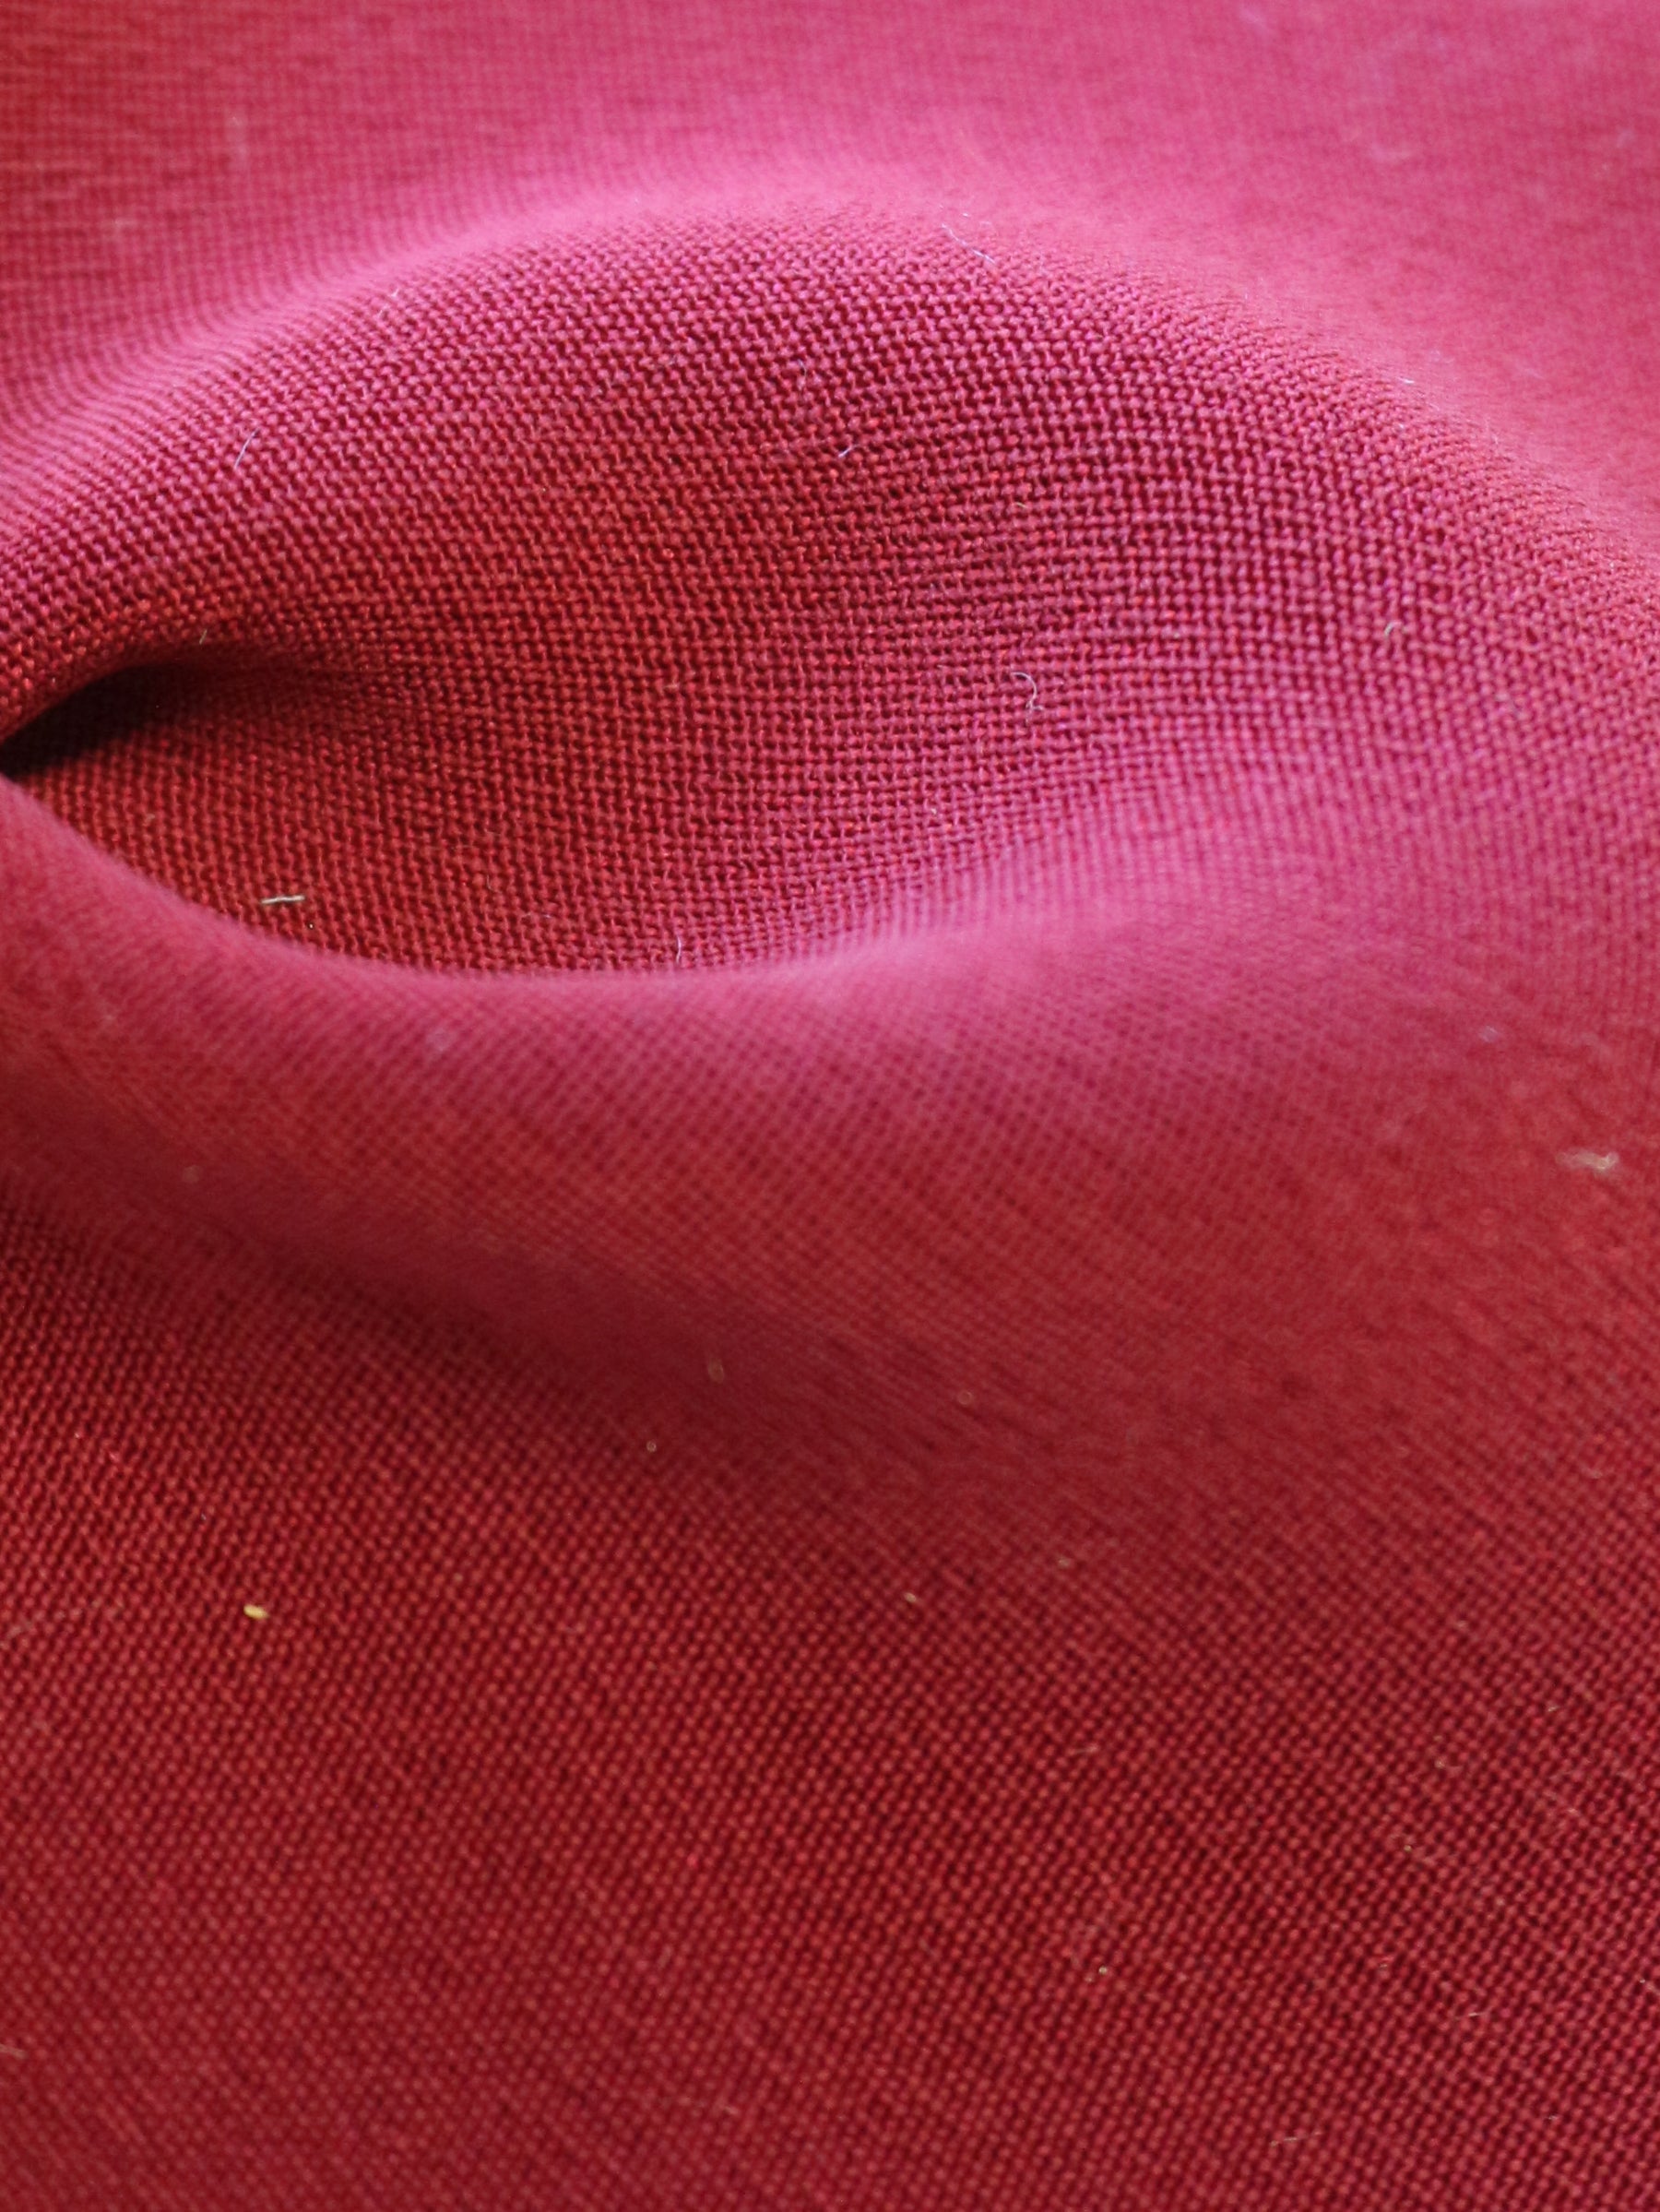 Silk Double Crepe (110cm/43.3" Dark Colours) - Tantalise